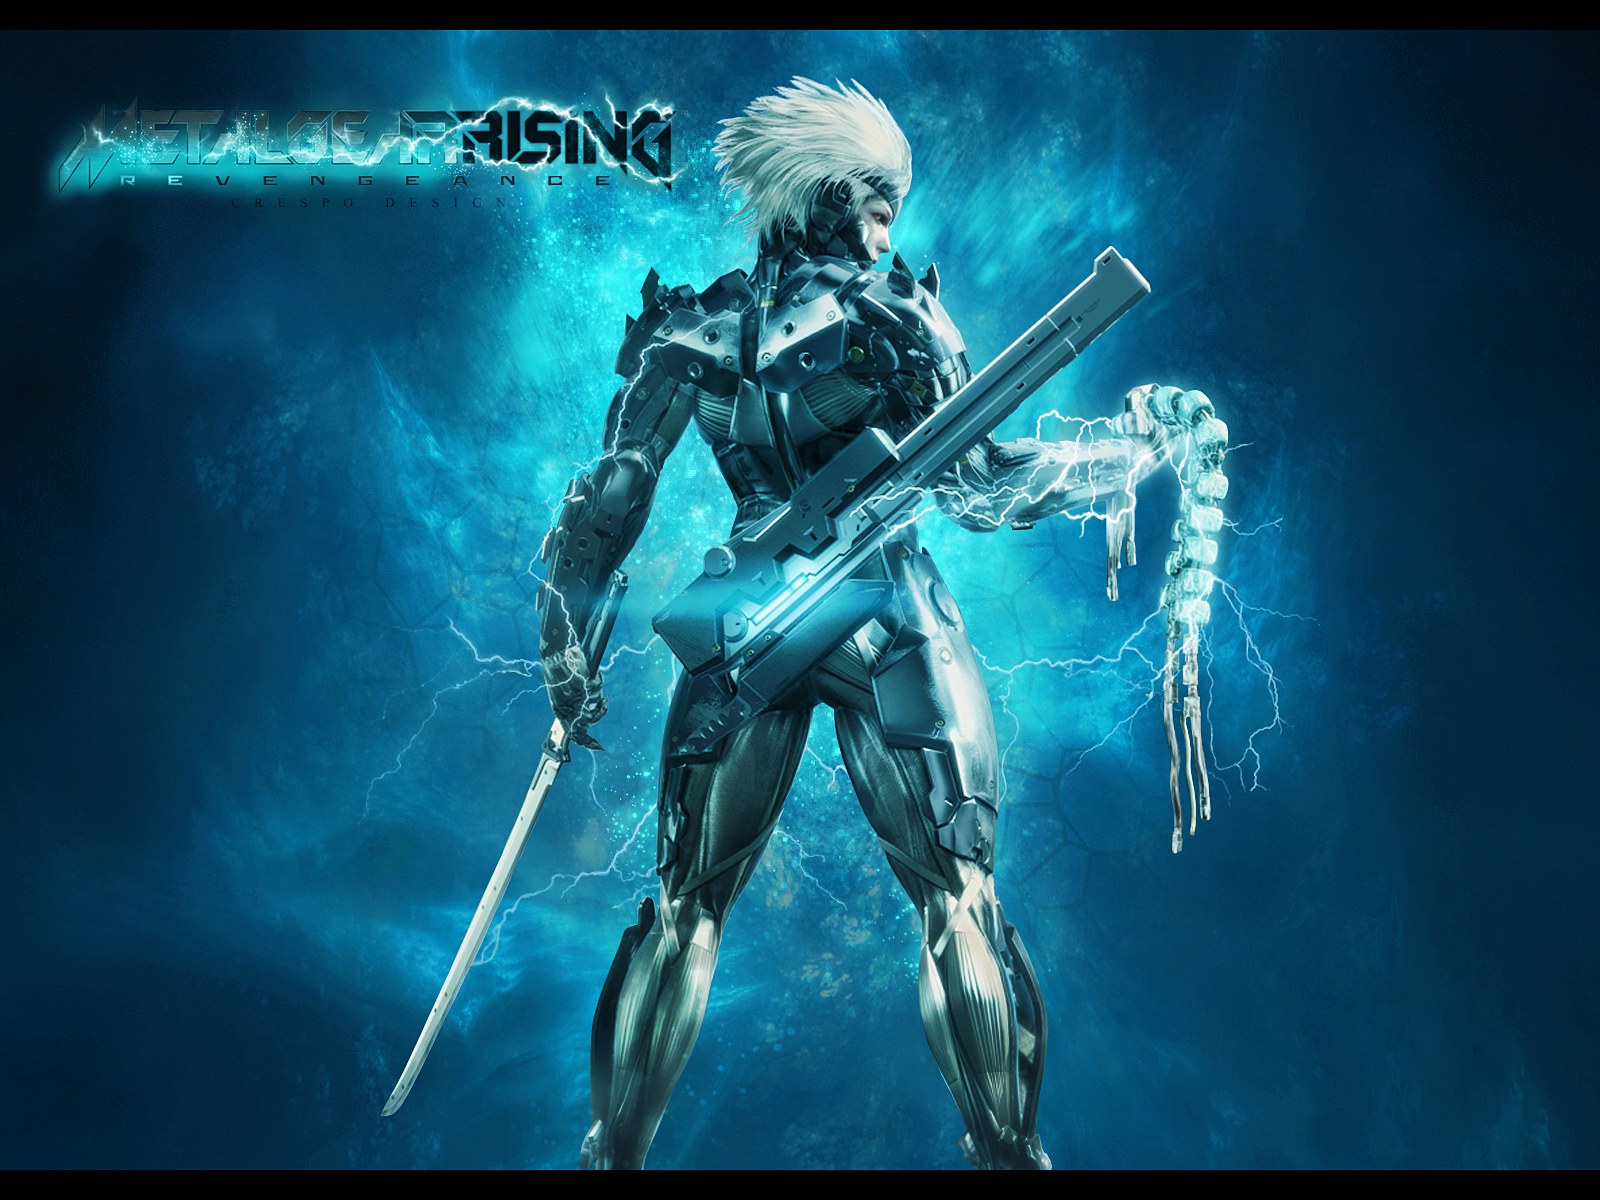 Metal Gear Rising Revengeance Wallpaper by Cre5po on